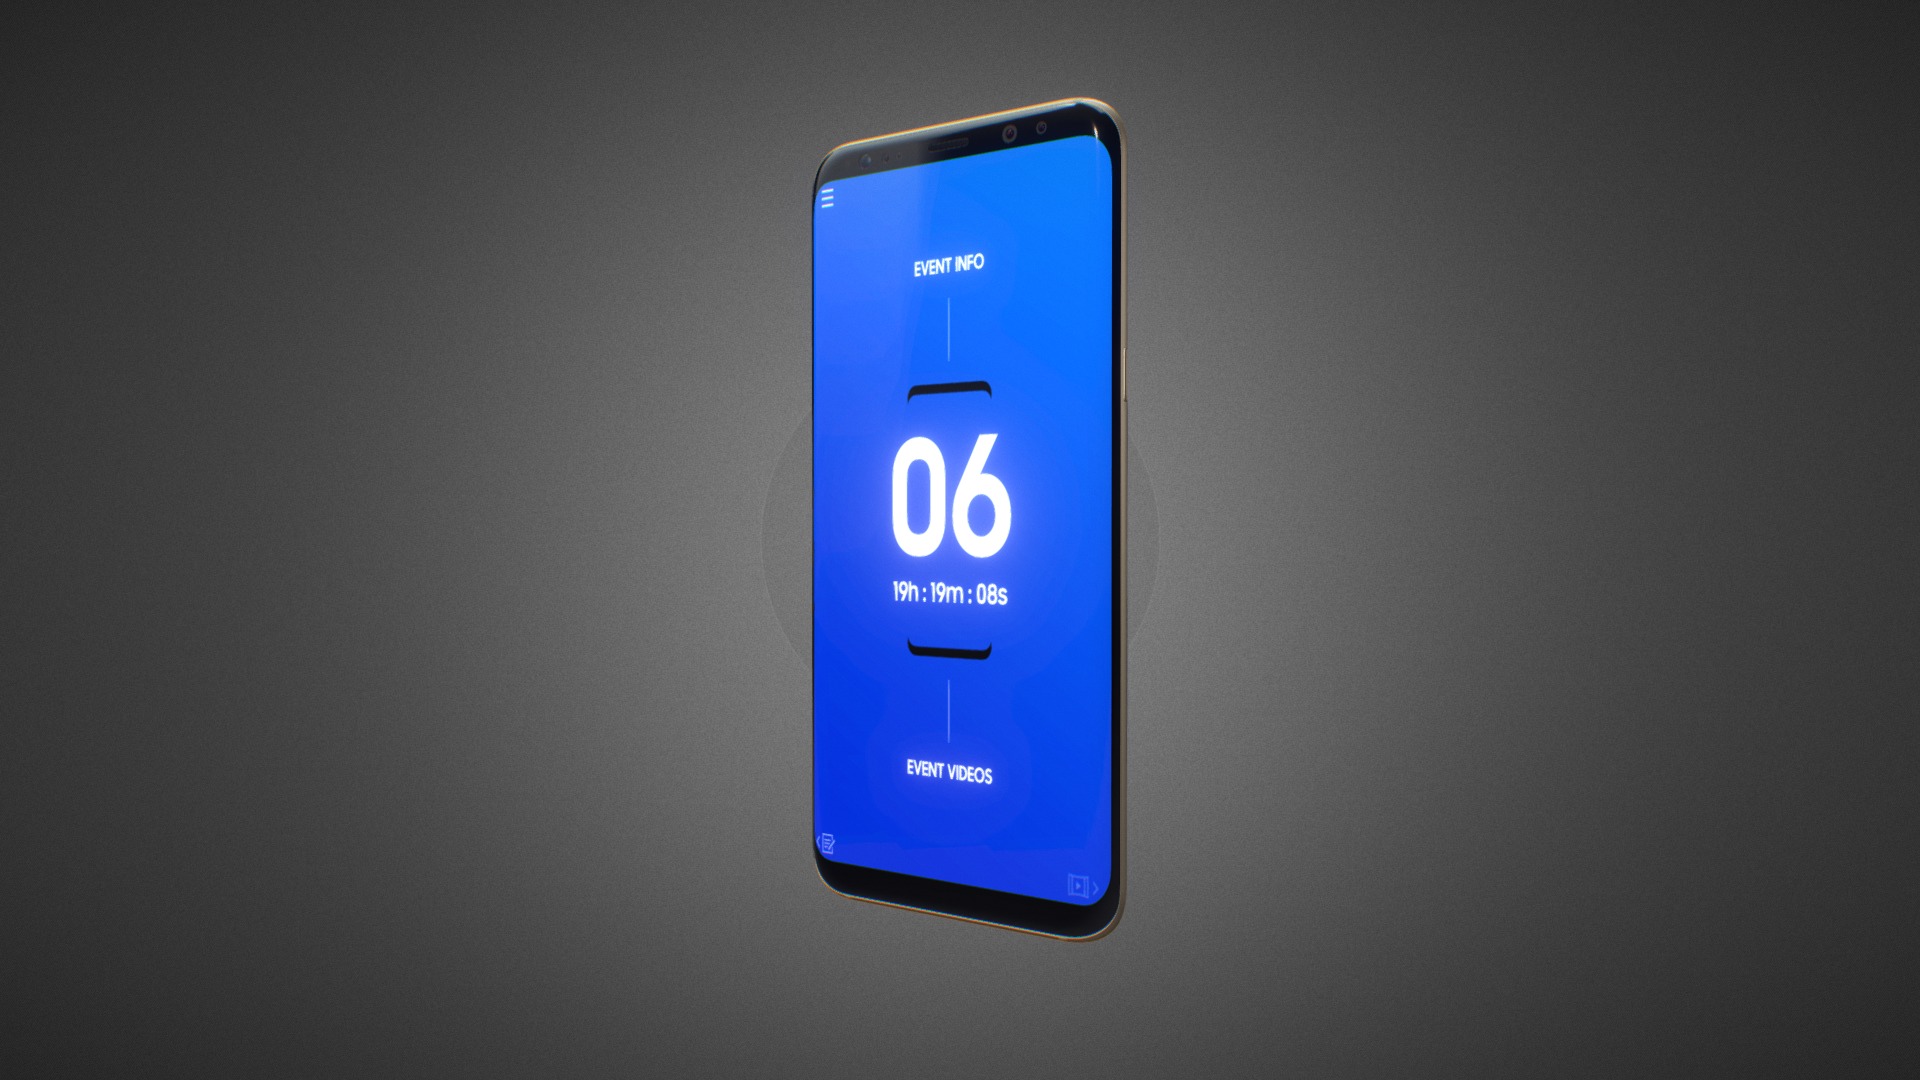 3D model Samsung Galaxy S8 Plus for Element 3D - This is a 3D model of the Samsung Galaxy S8 Plus for Element 3D. The 3D model is about a blue cell phone.